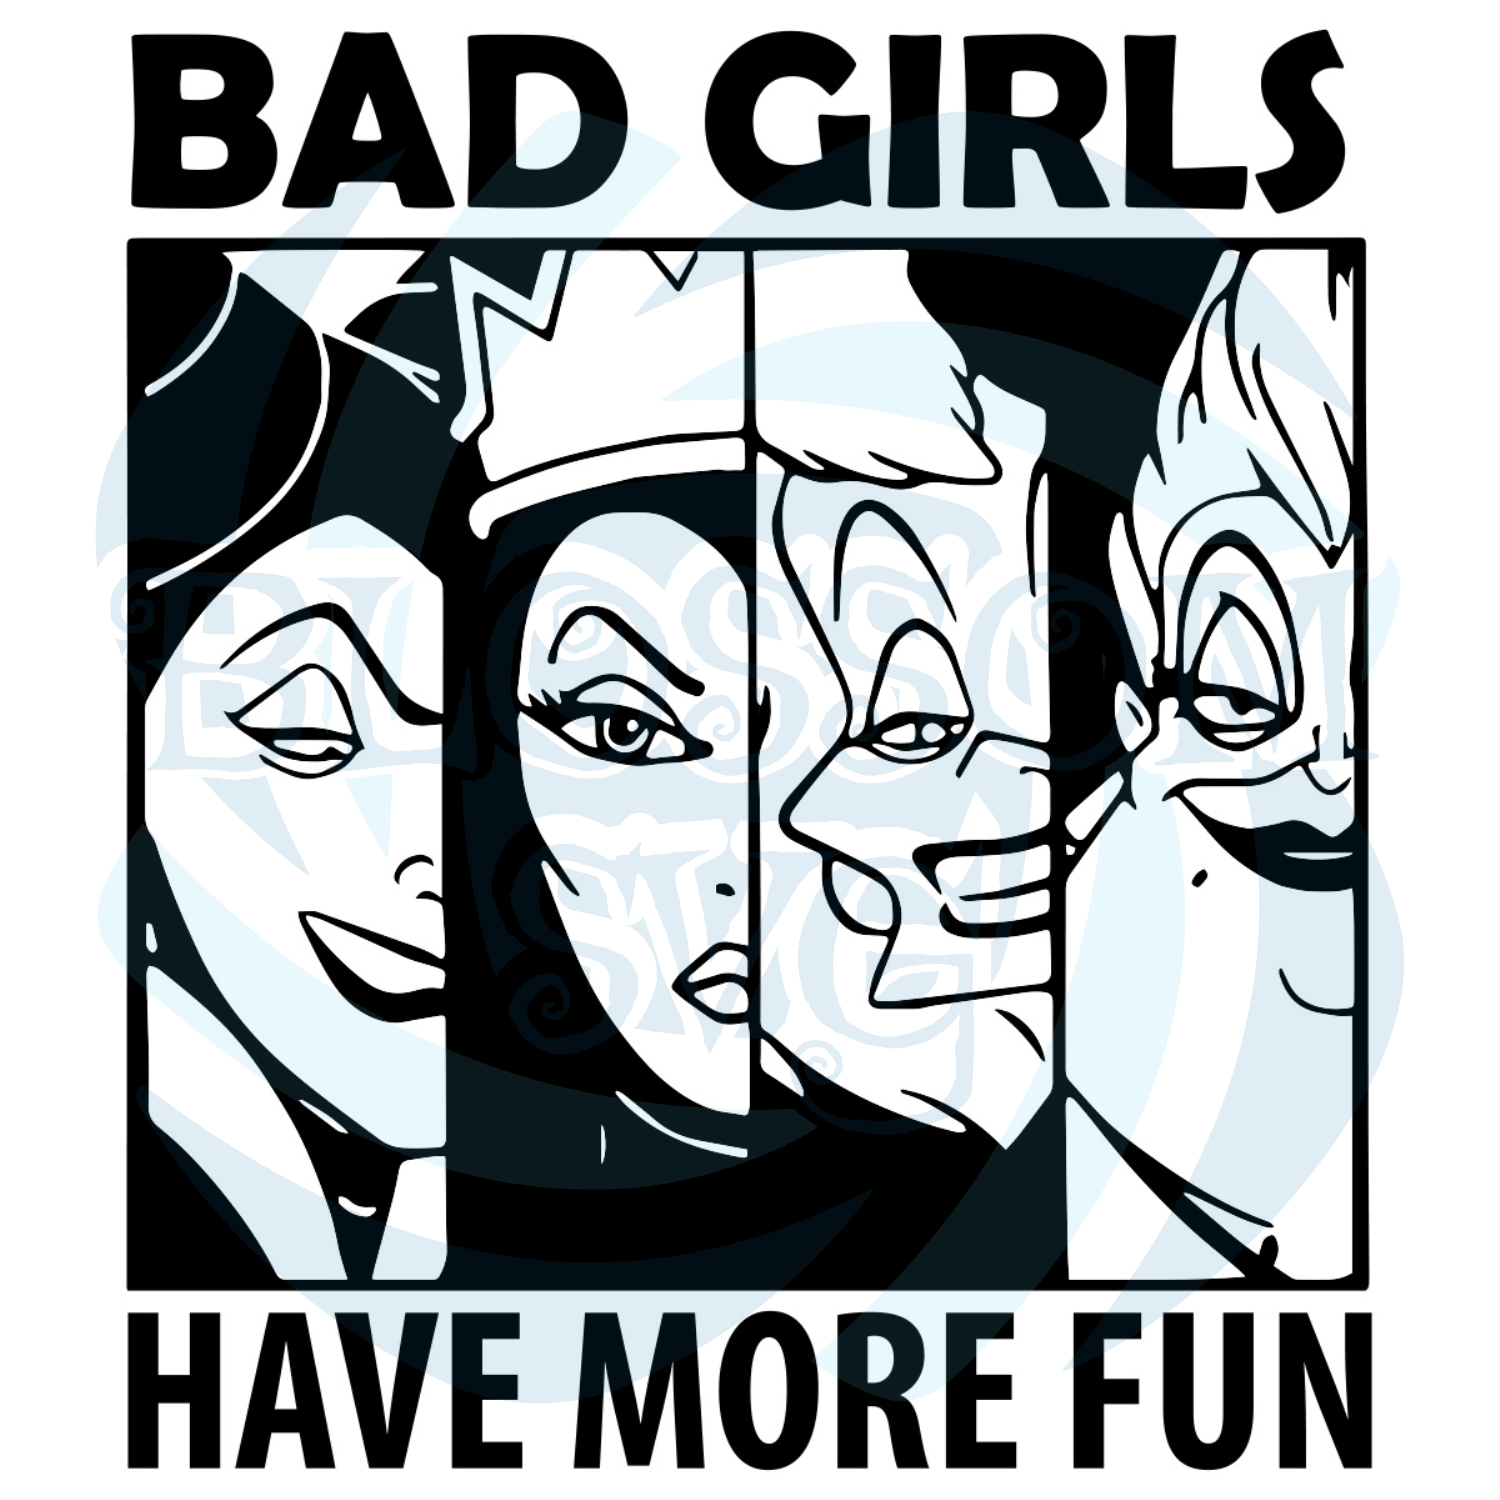 Bad girls have more fun svg